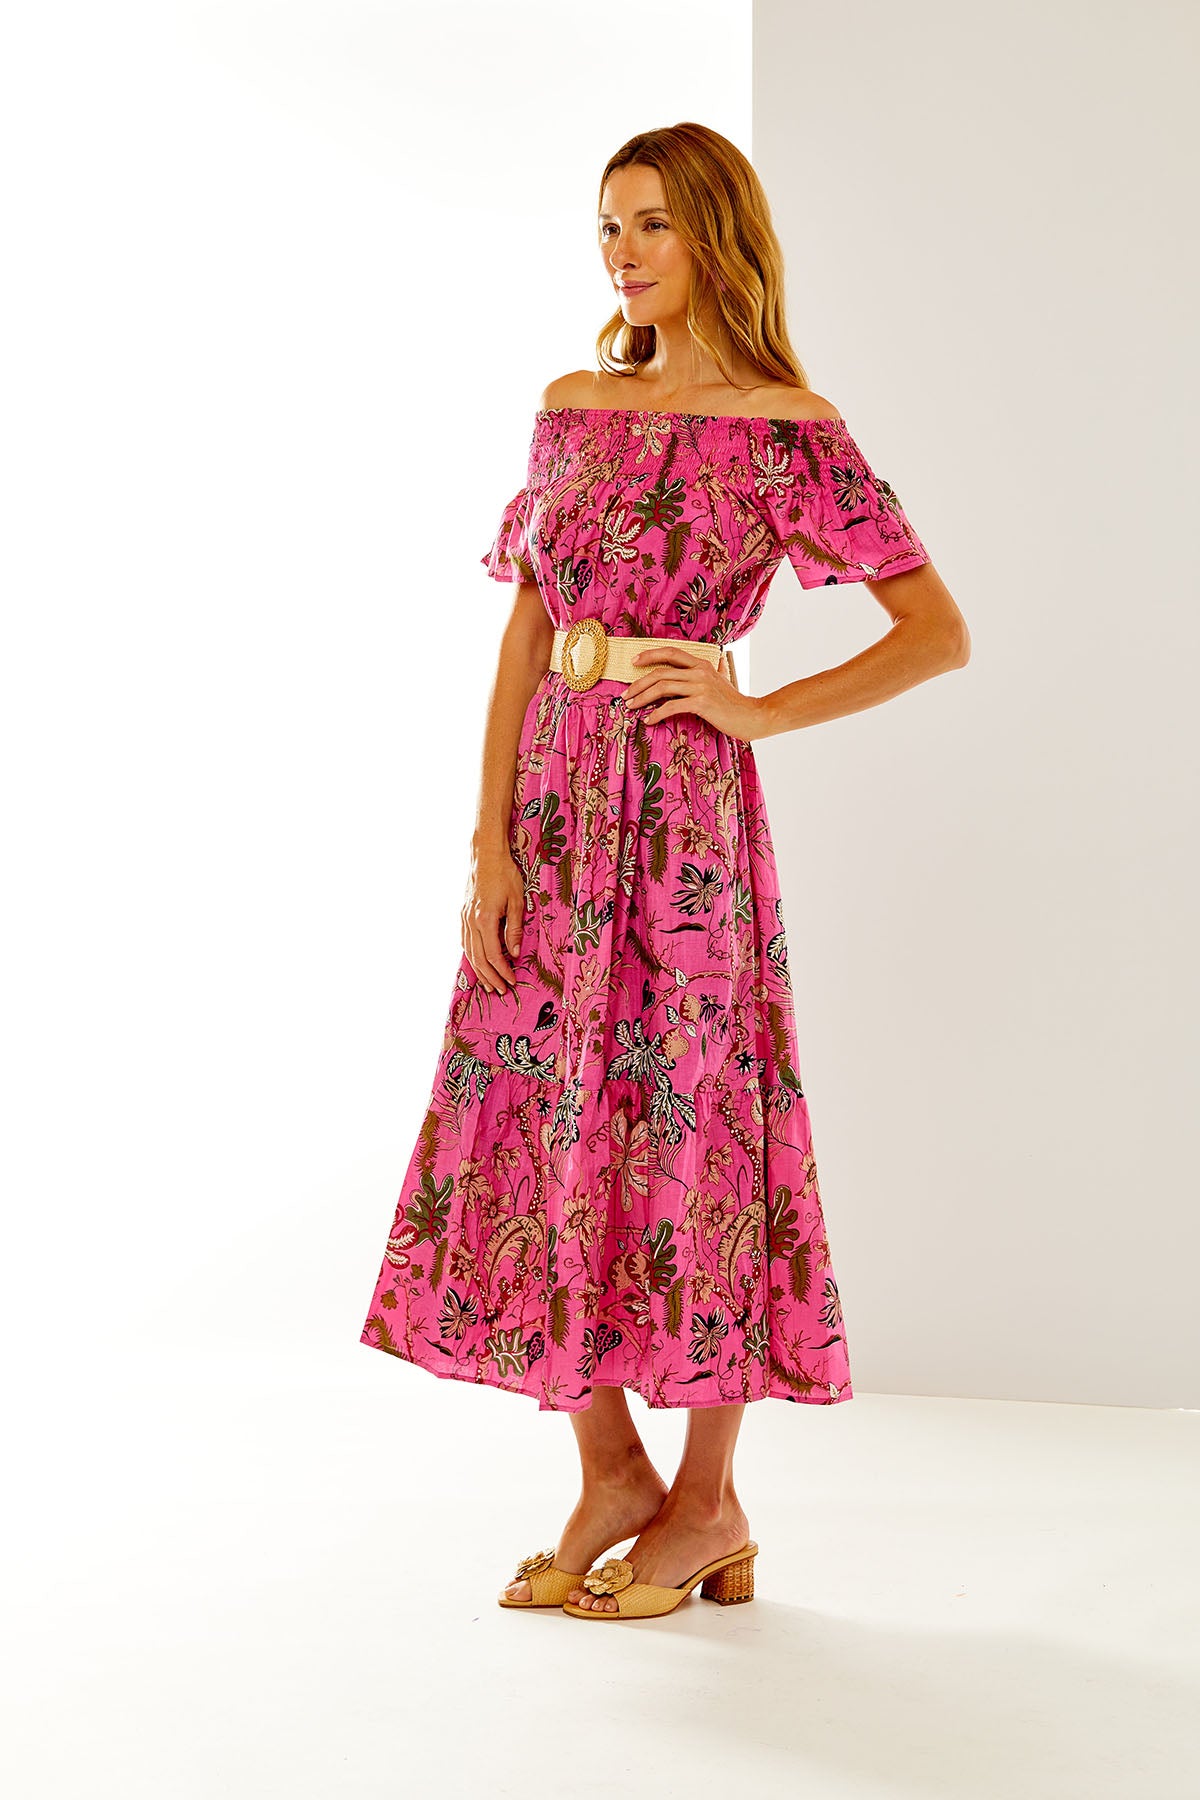 Woman in fuchsia floral dress